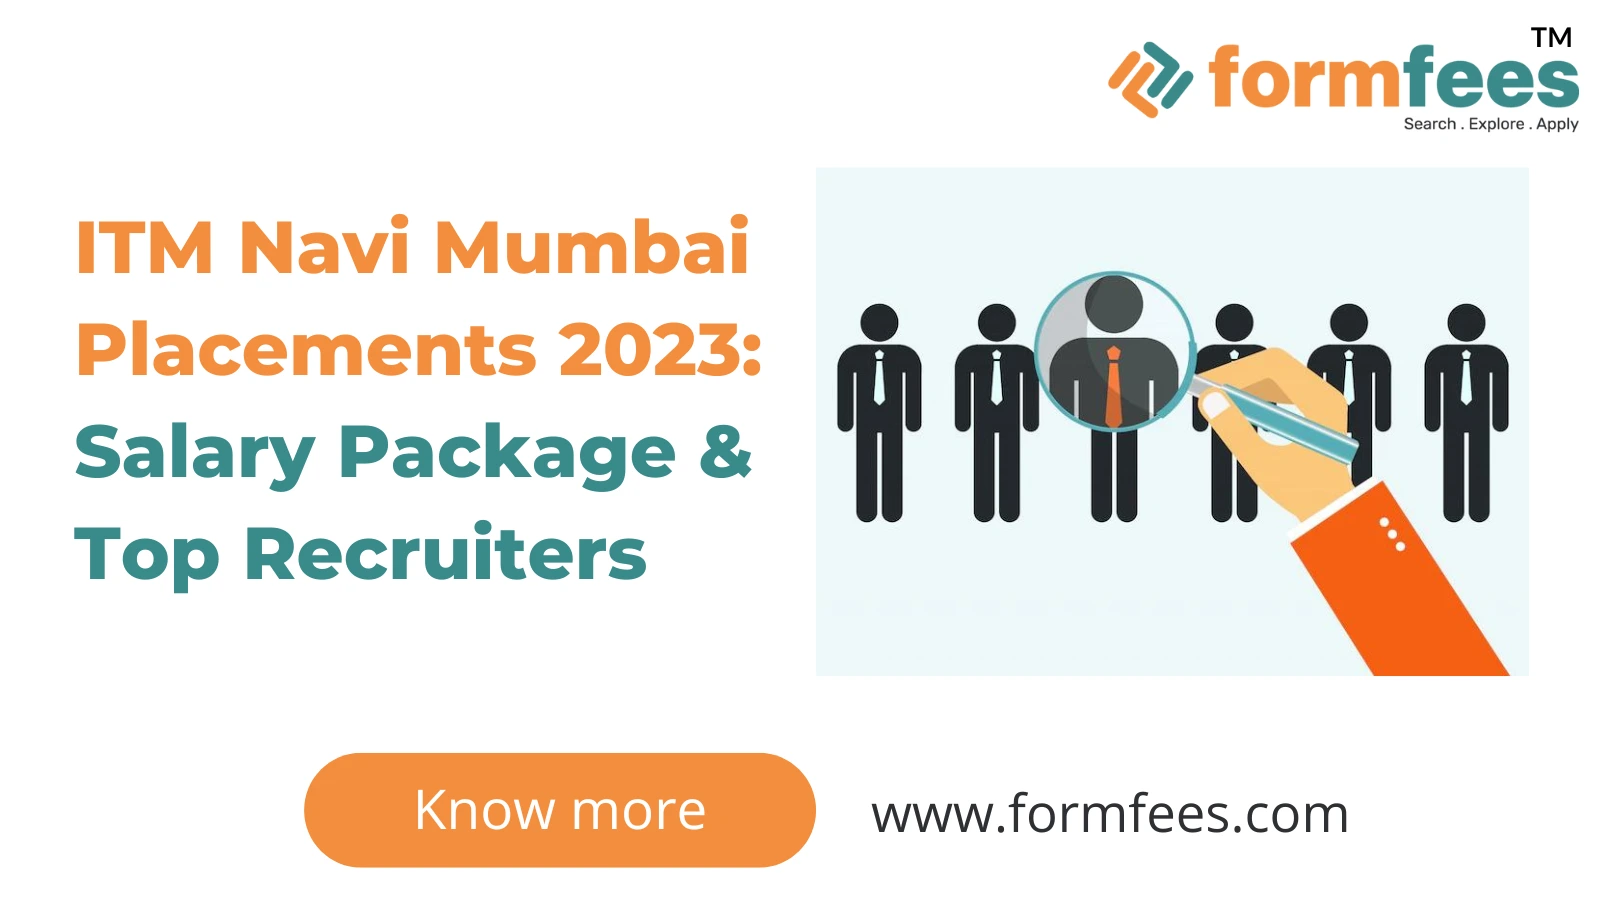 ITM Navi Mumbai Placements 2023 Salary Package & Top Recruiters